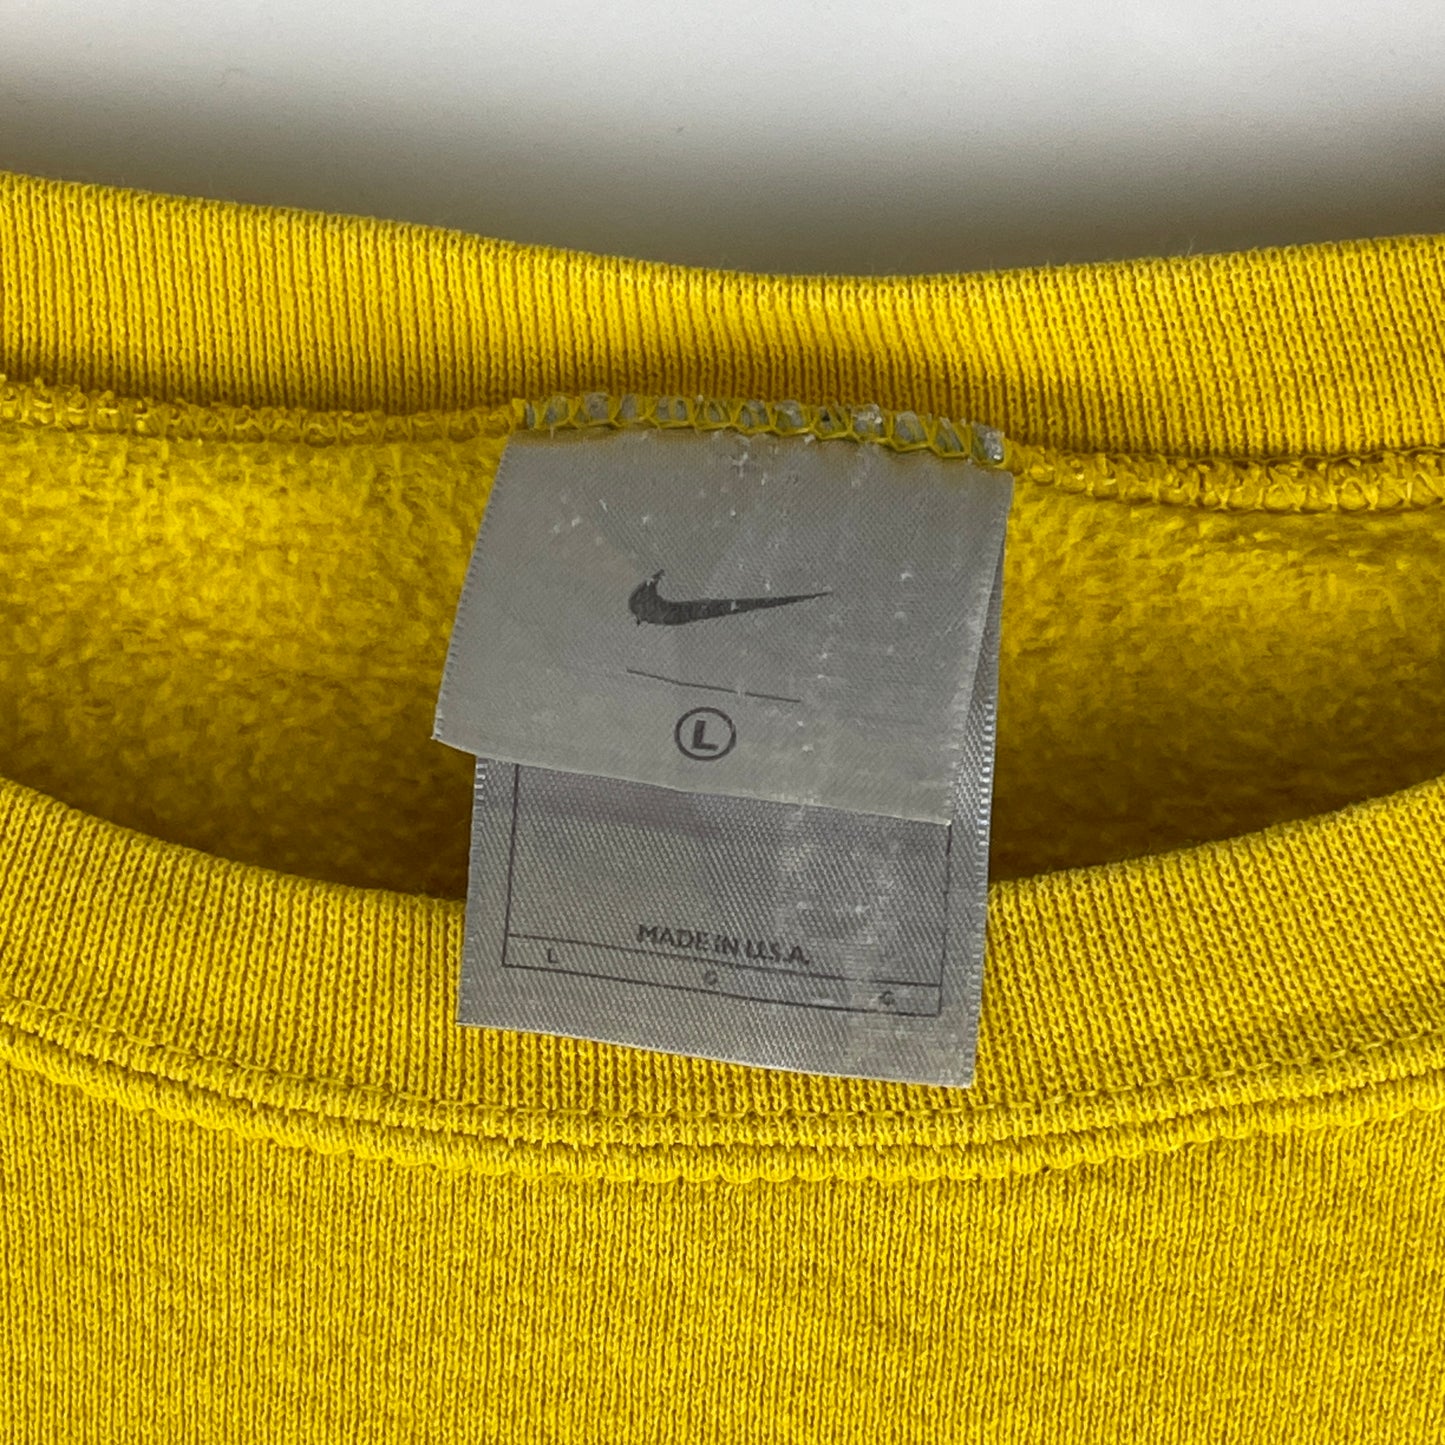 Vintage Nike Miniswoosh embroidered 00's Y2K Yellow Mustard Crewneck